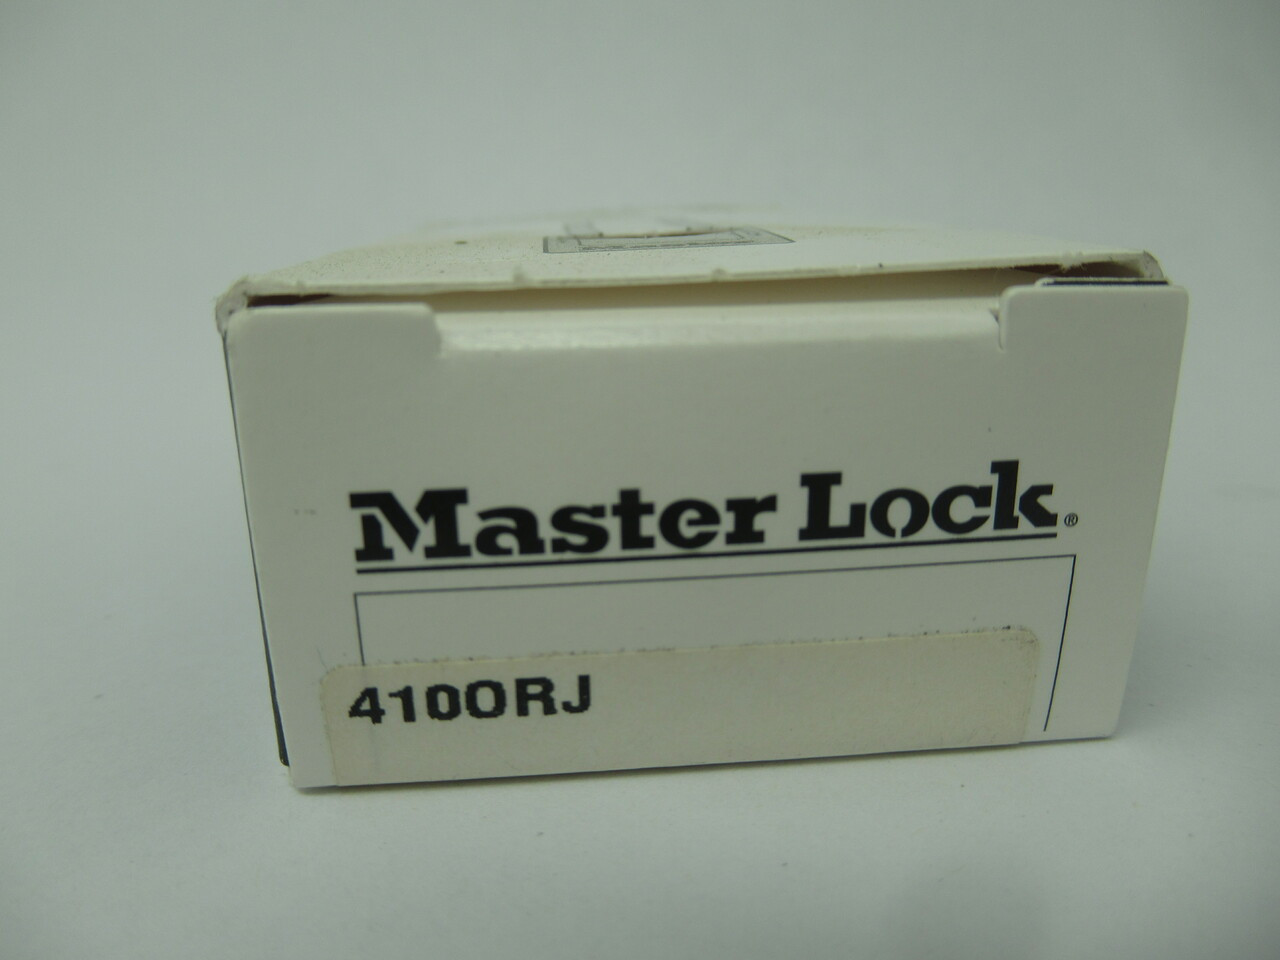 Master Lock 410ORJ Thermoplastic Safety Padlock Orange 1-1/2" W 1-1/2" Tall NEW